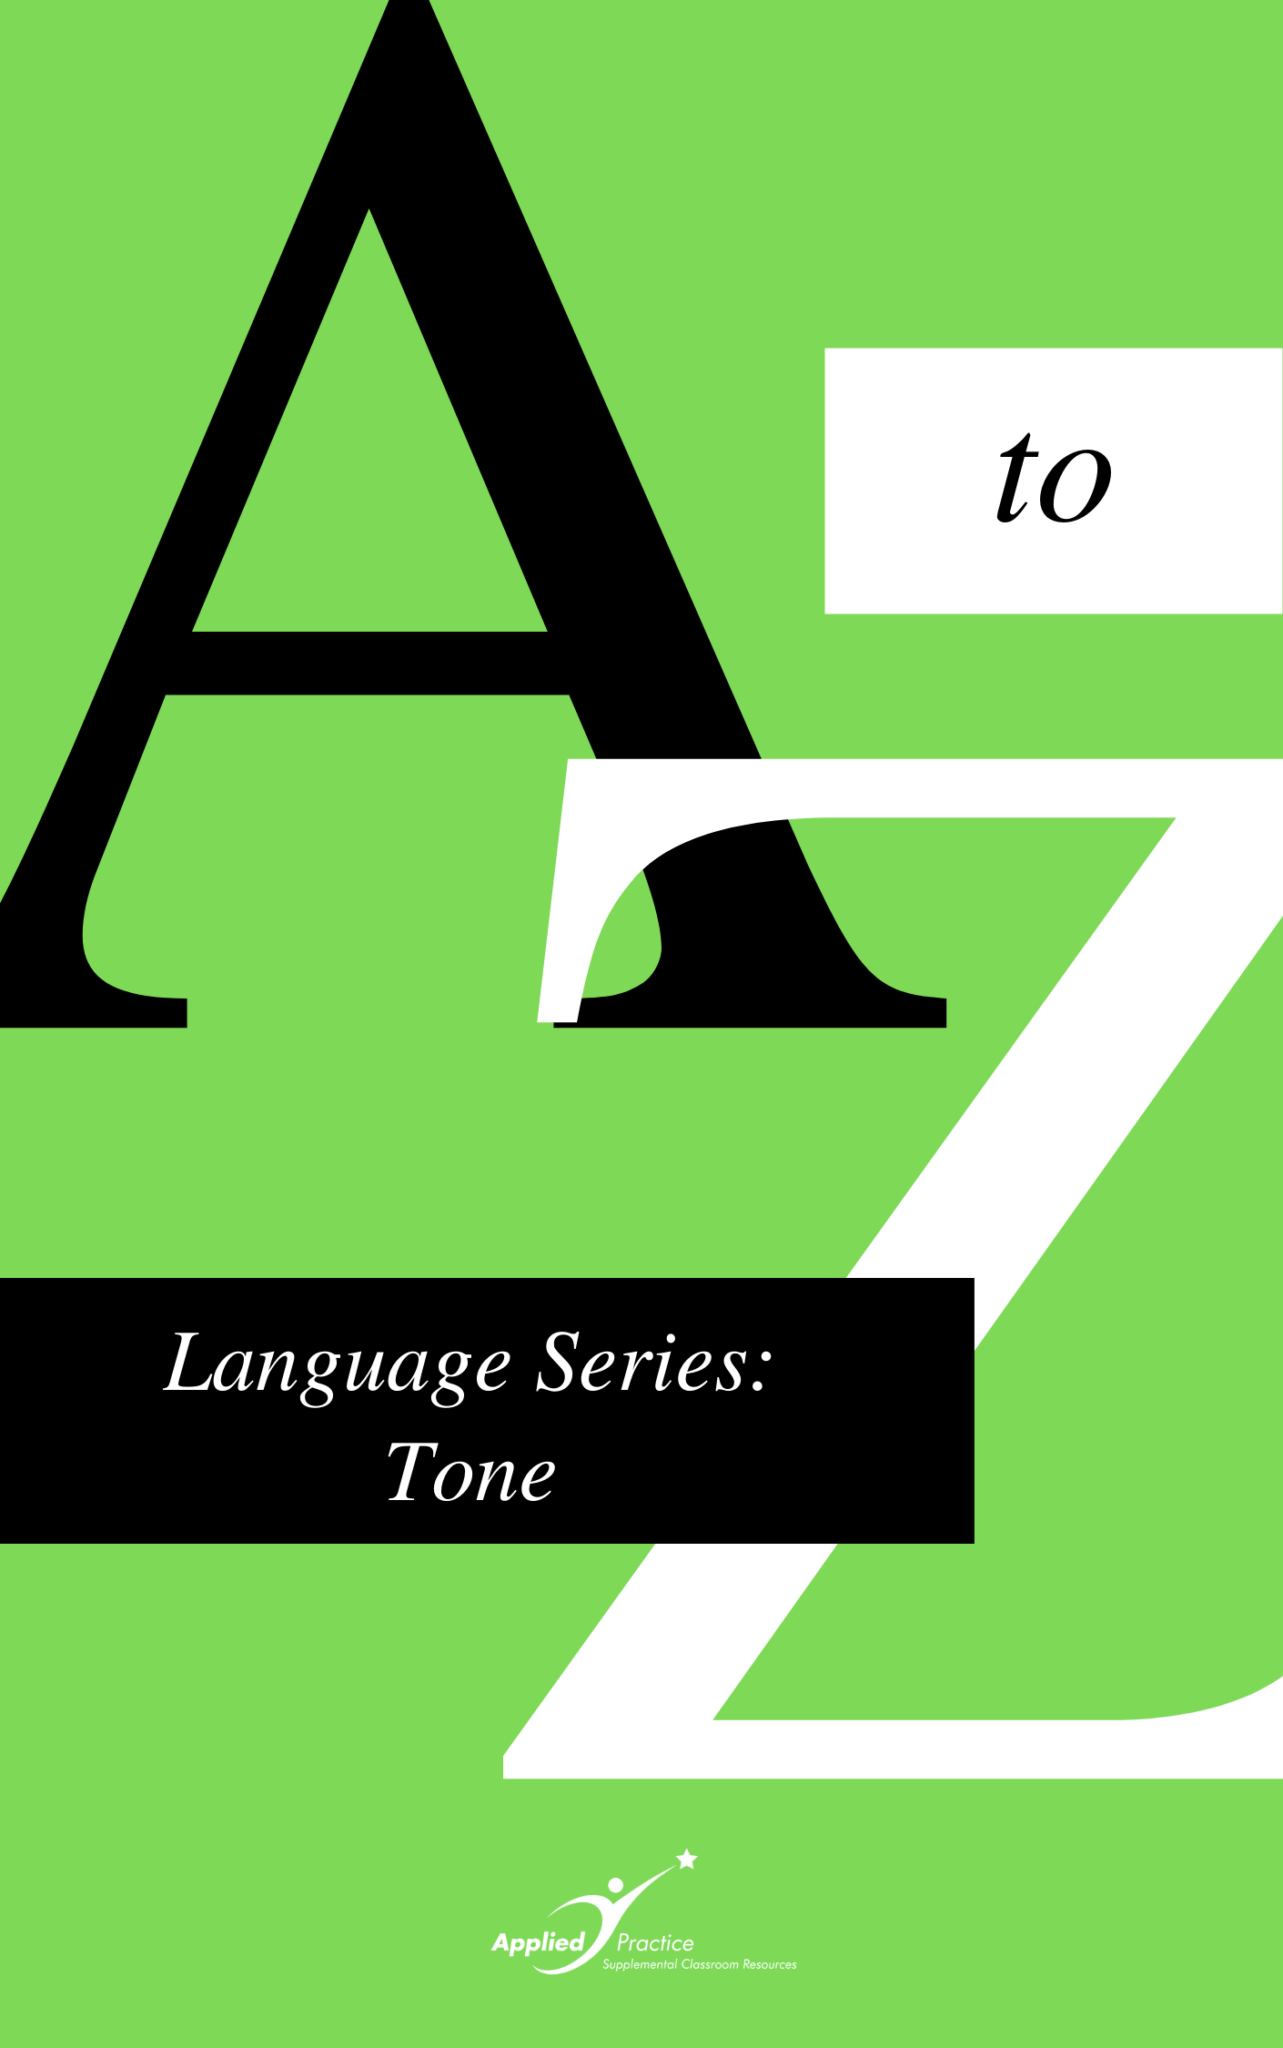 language-series-tone-applied-practice